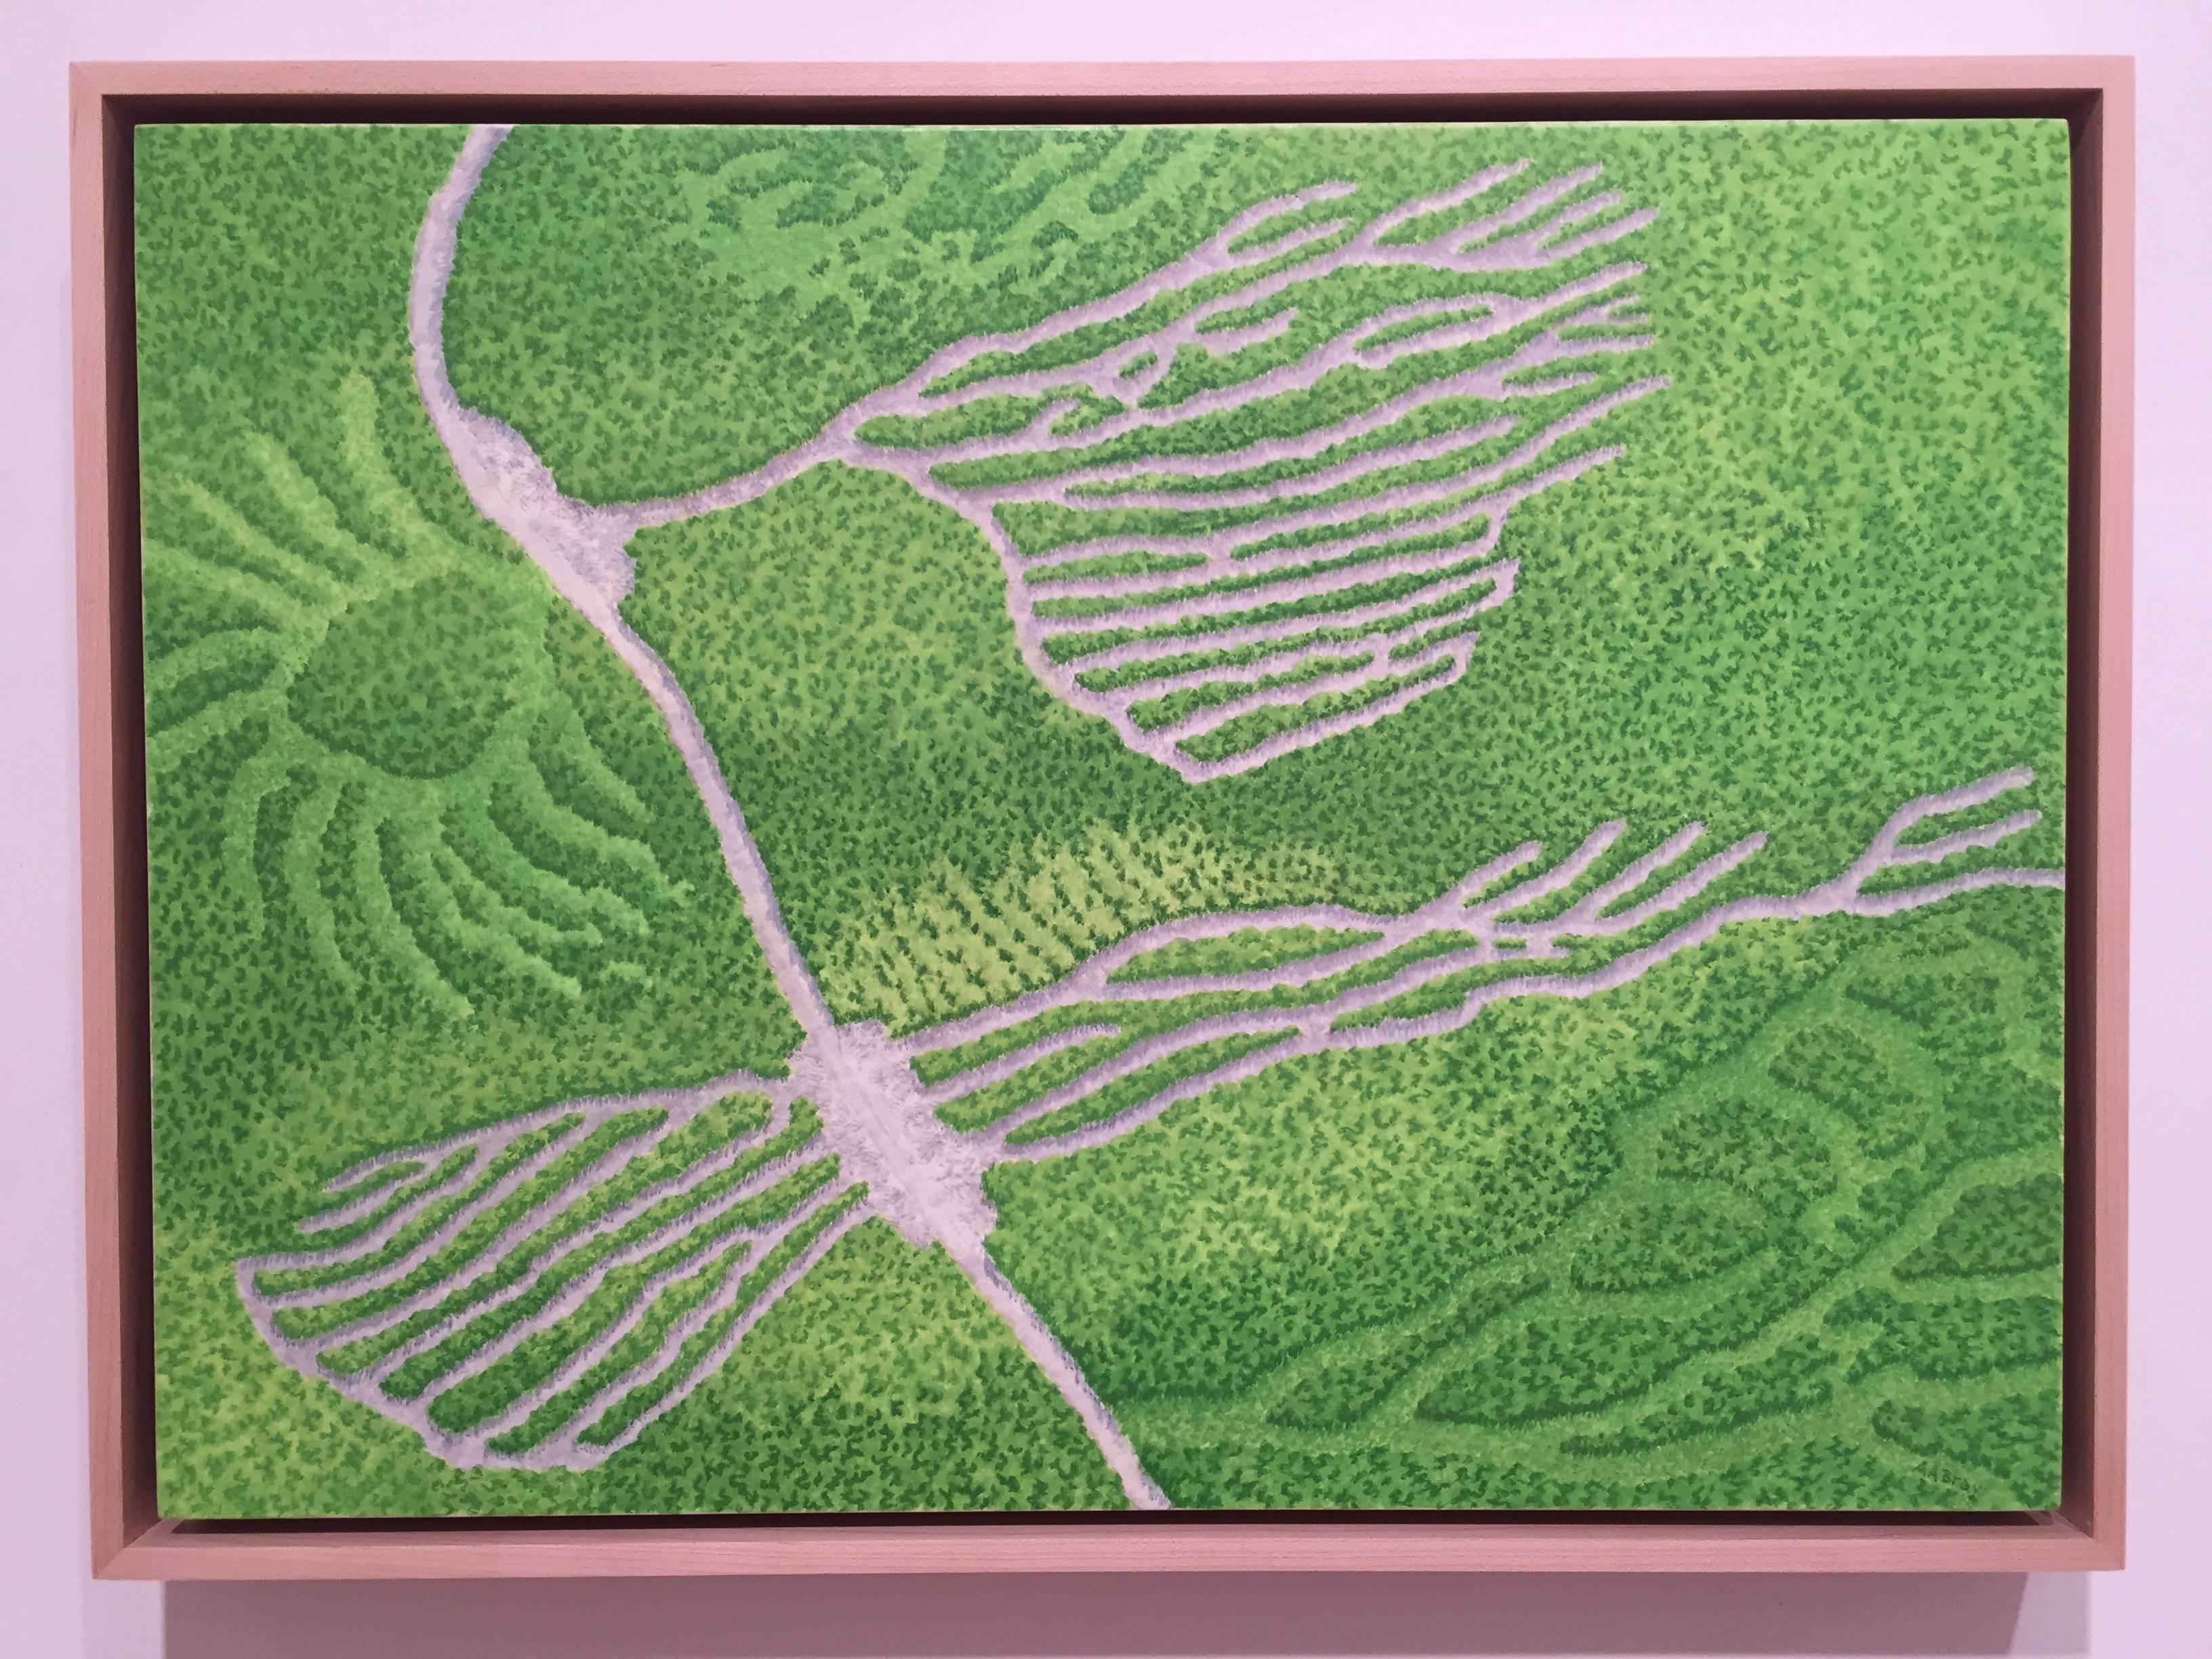 Terrain Vague, green Casein Maine landscape painting, 2015 - Green Landscape Painting by Alan Bray